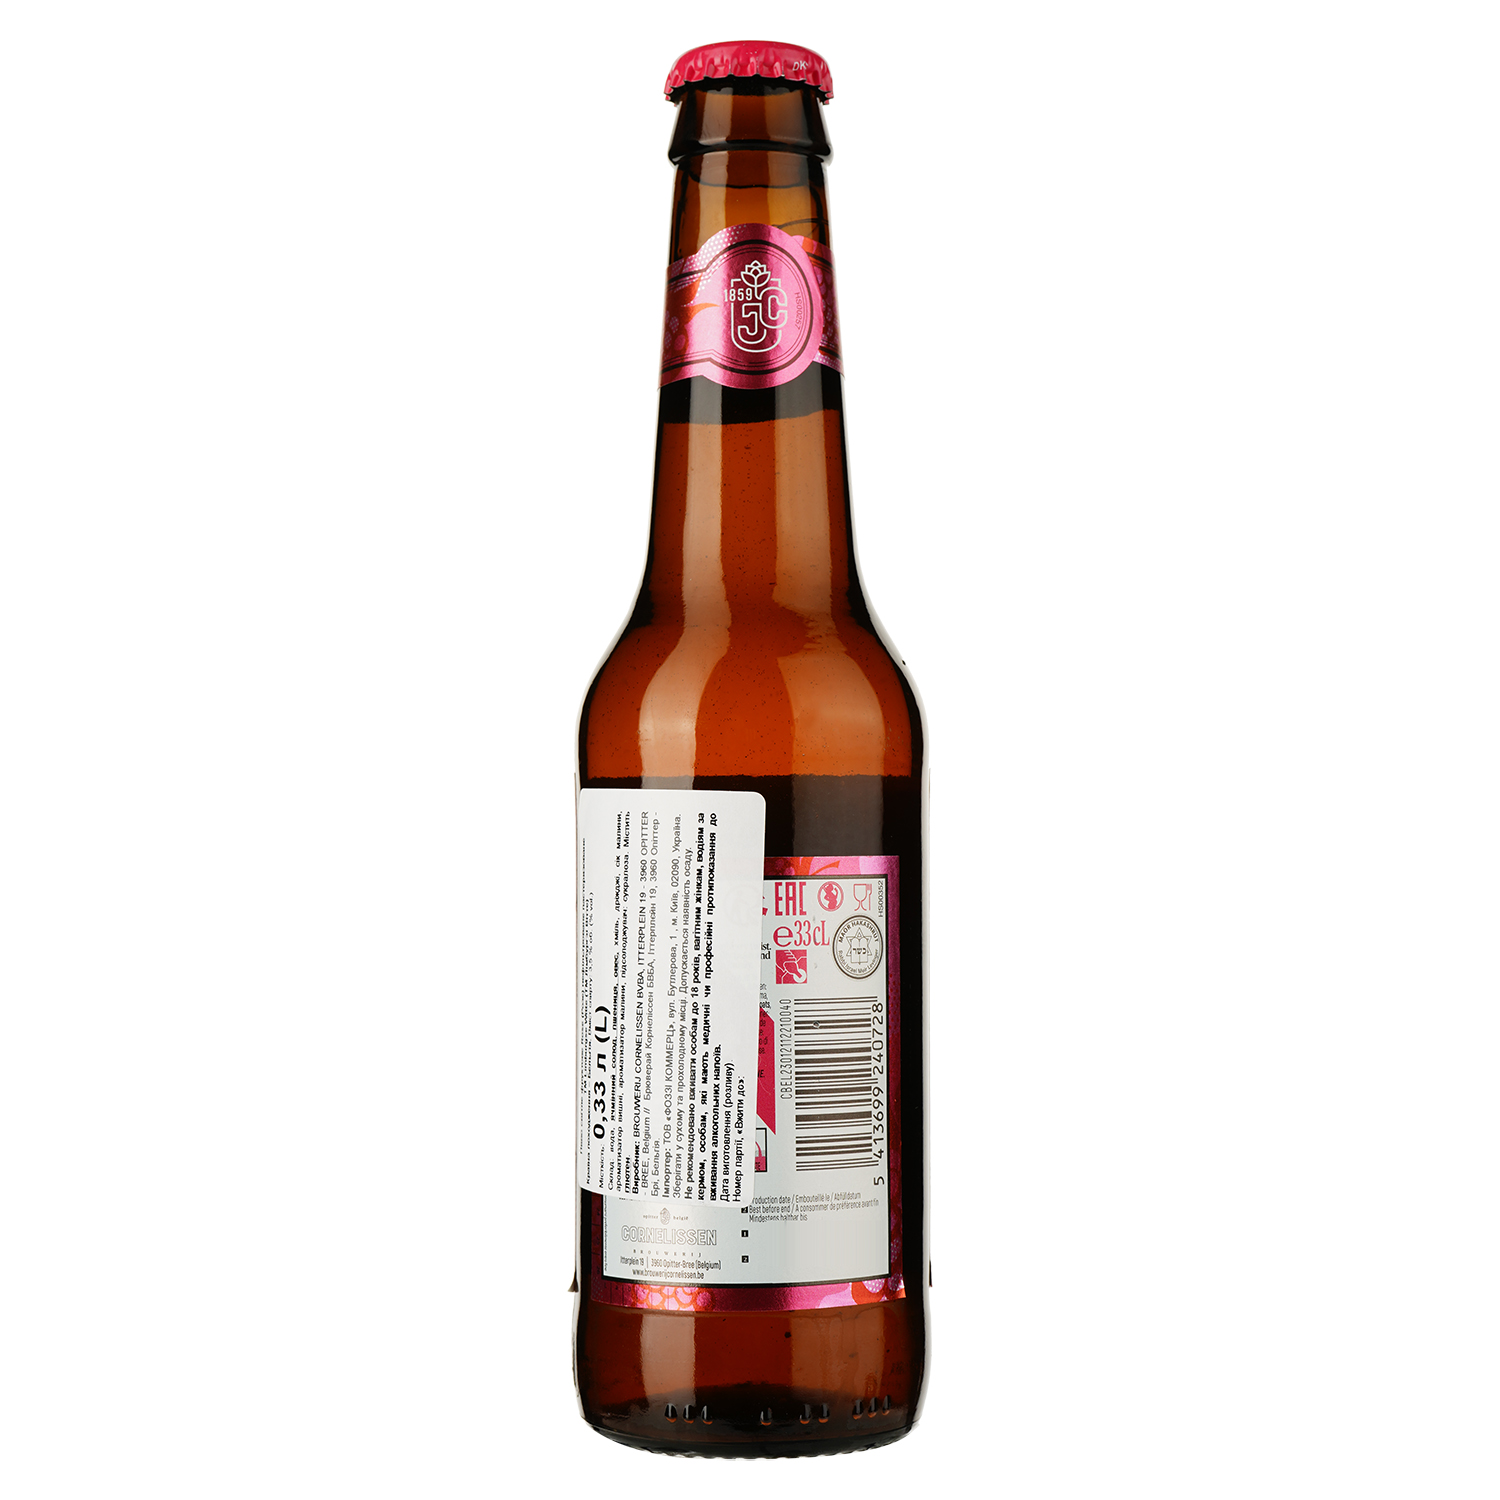 Пиво Limburgse Witte Rose белое 3.5% 0.33 л - фото 2